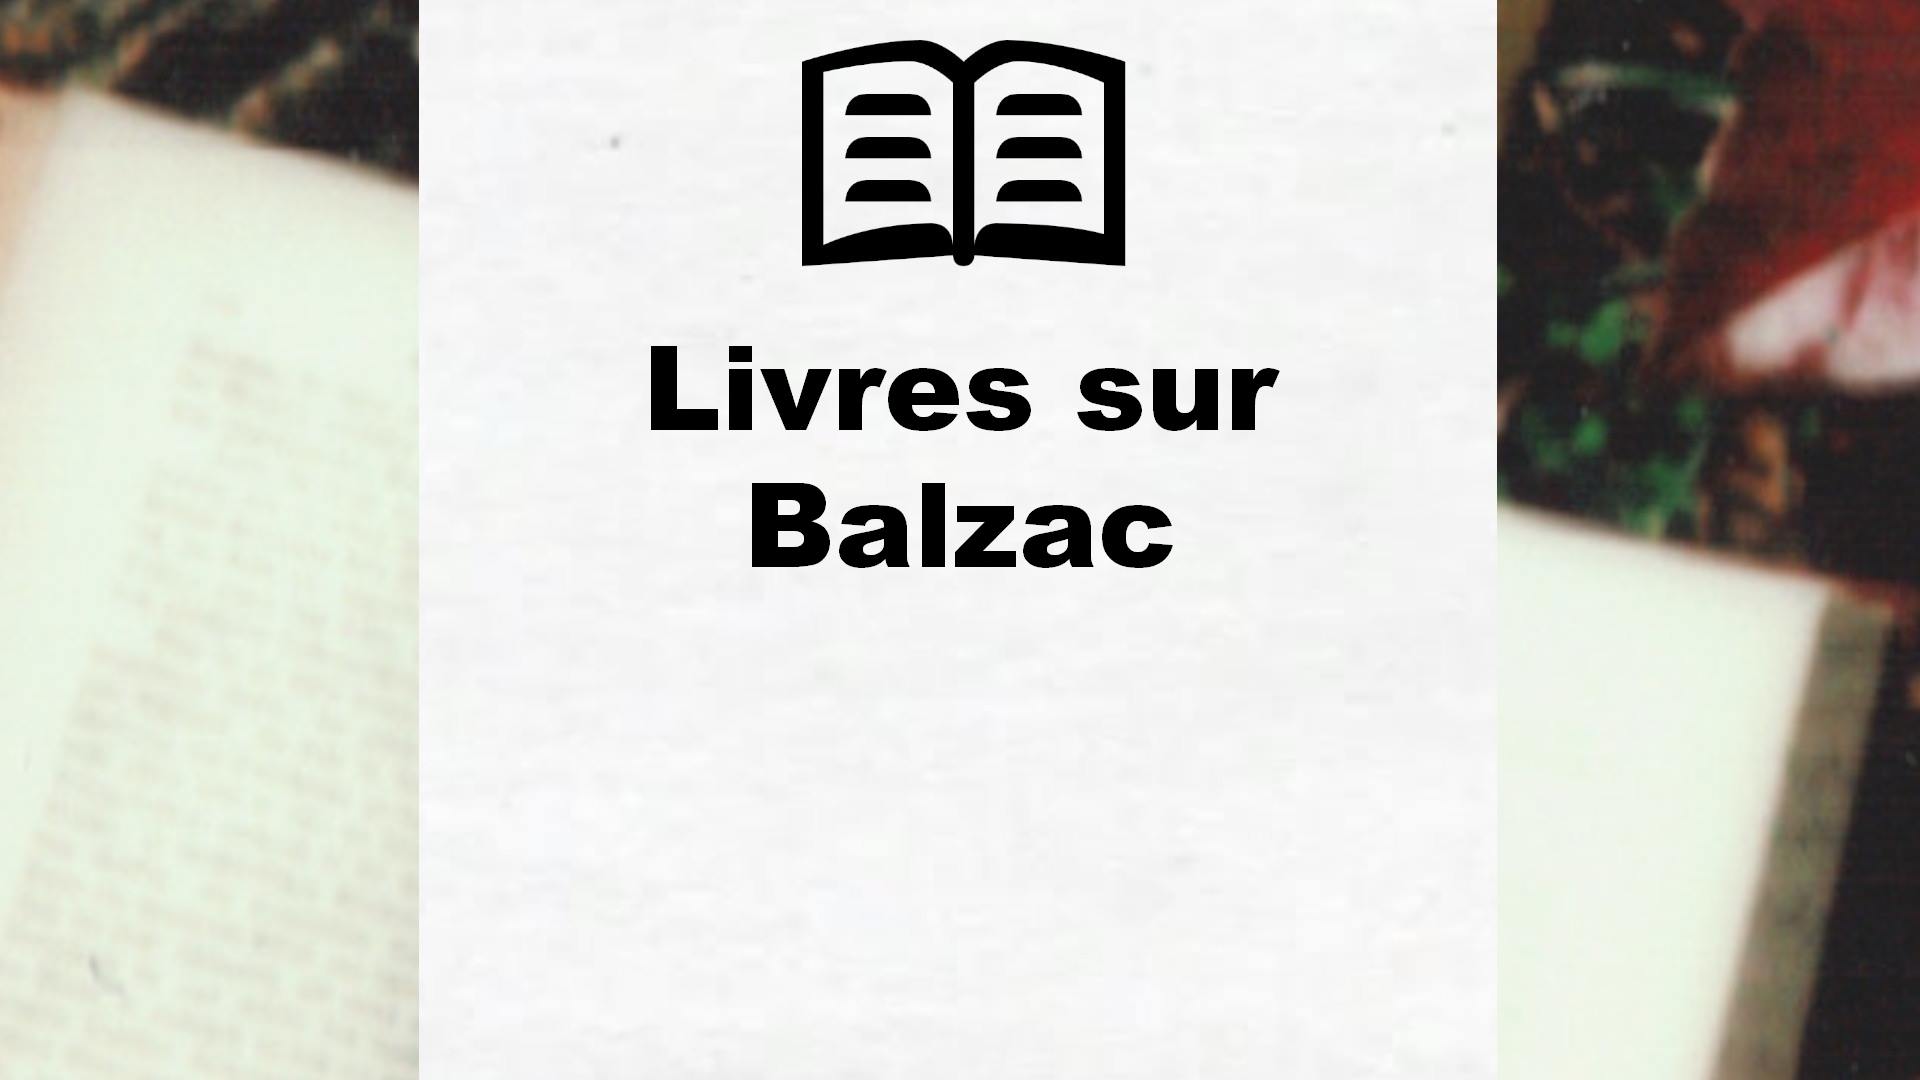 Livres sur Balzac